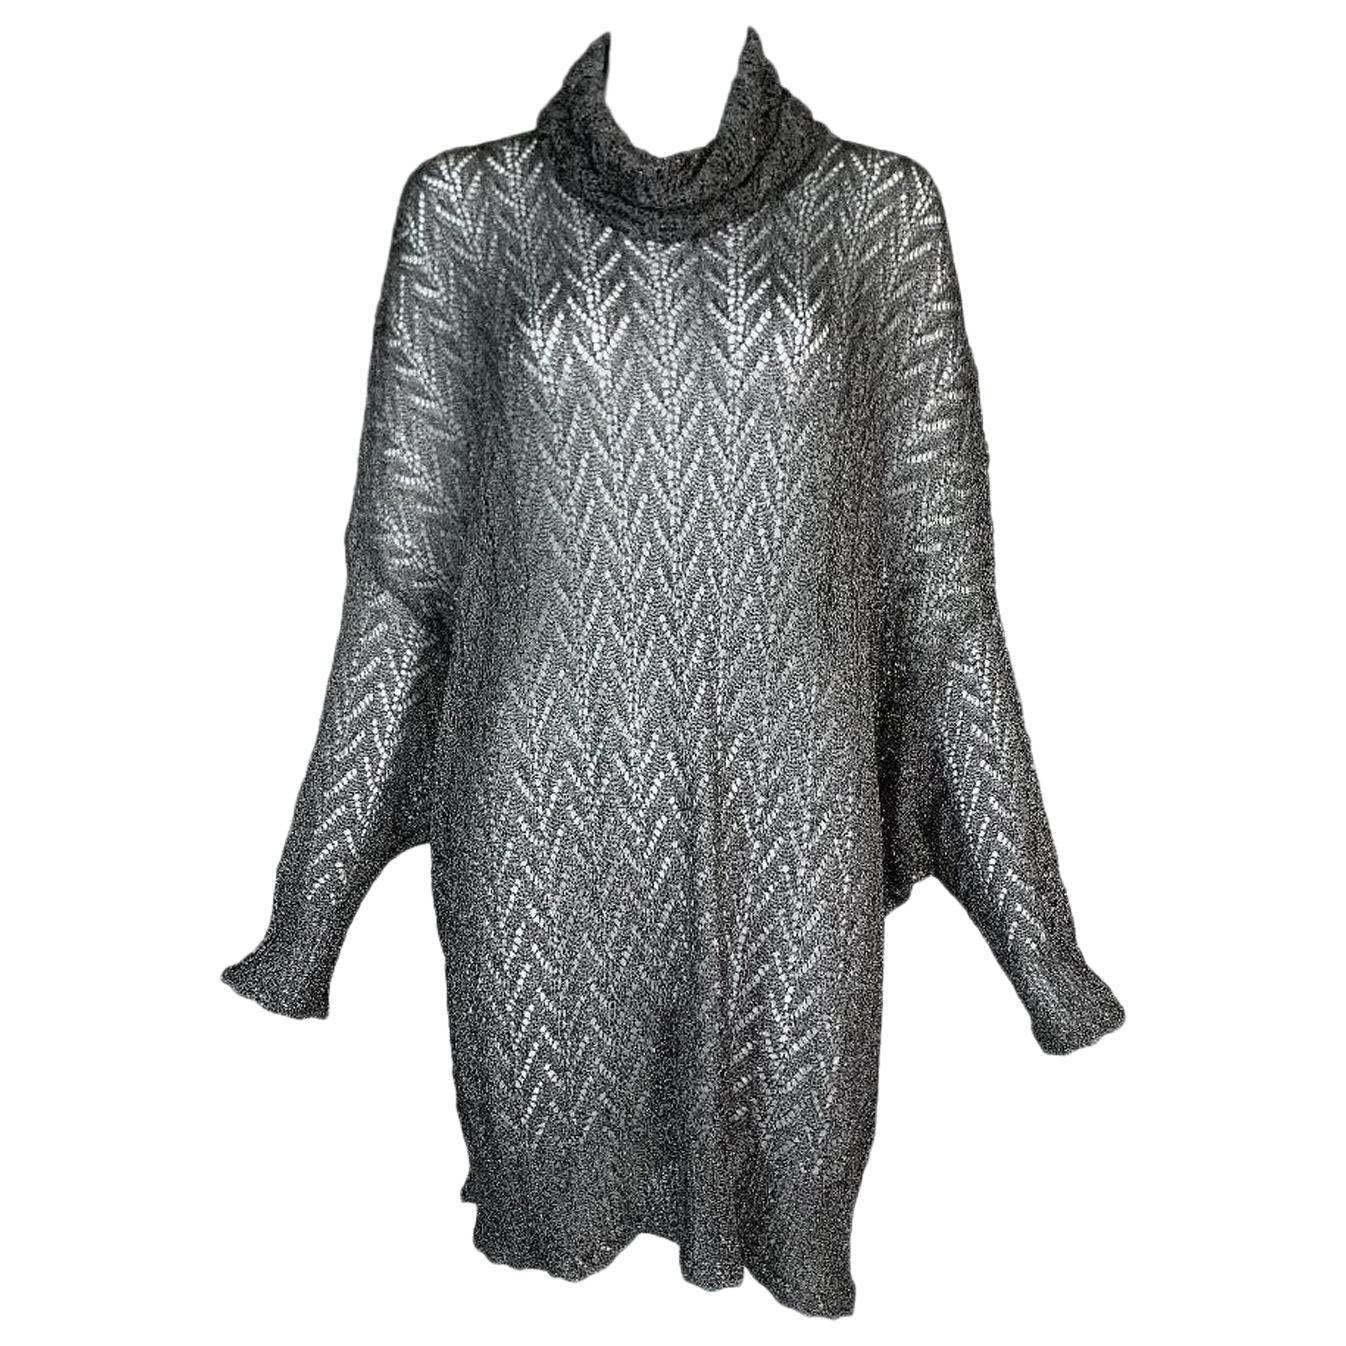 F/W 1998 Christian Dior by John Galliano Sheer Silver Baggy Sweater Dress S